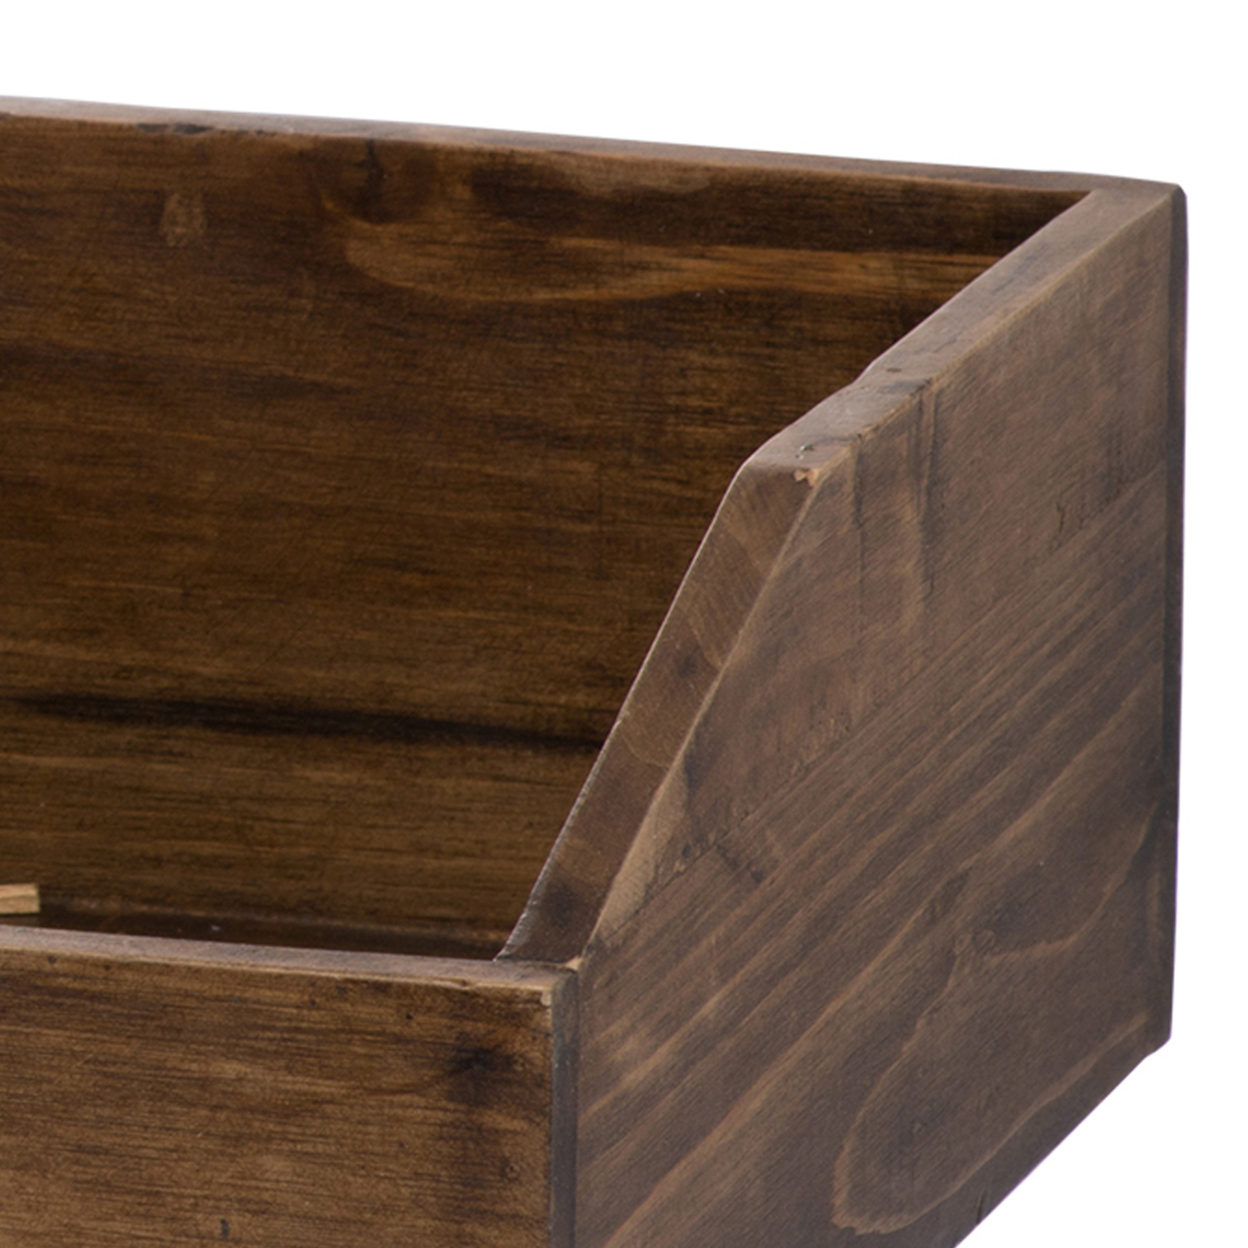 19, 13, 10 Inch Fir Wood Box, Set Of 4 With Metal Handles, Antique Brown- Saltoro Sherpi